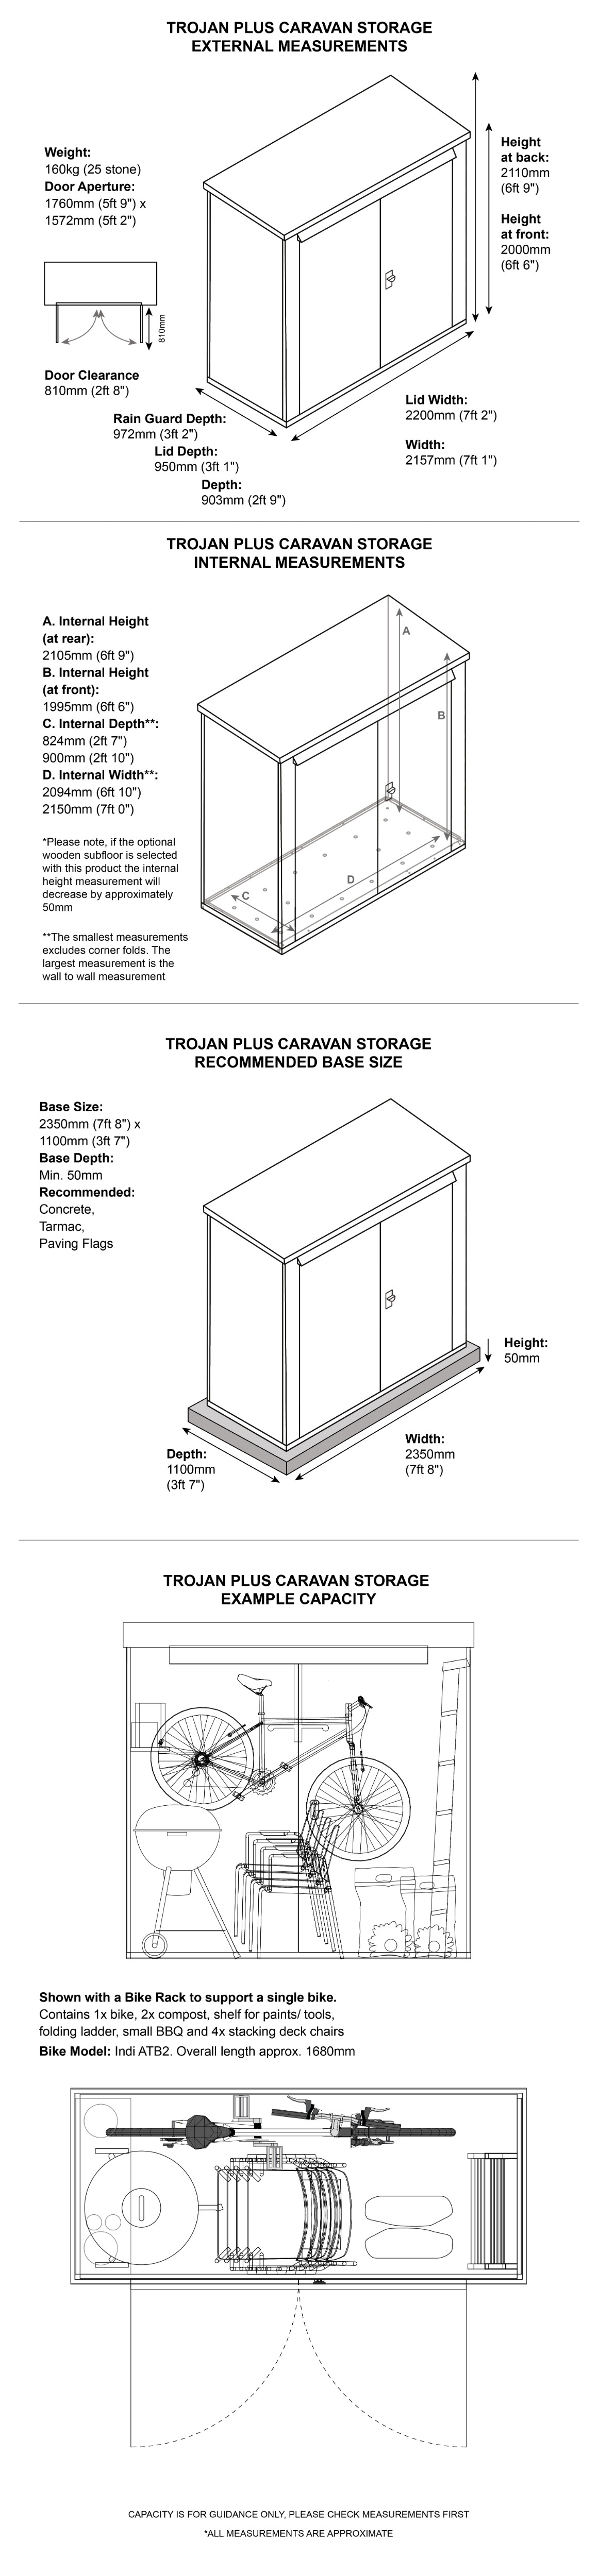 Trojan Plus Caravan Storage Dimensions